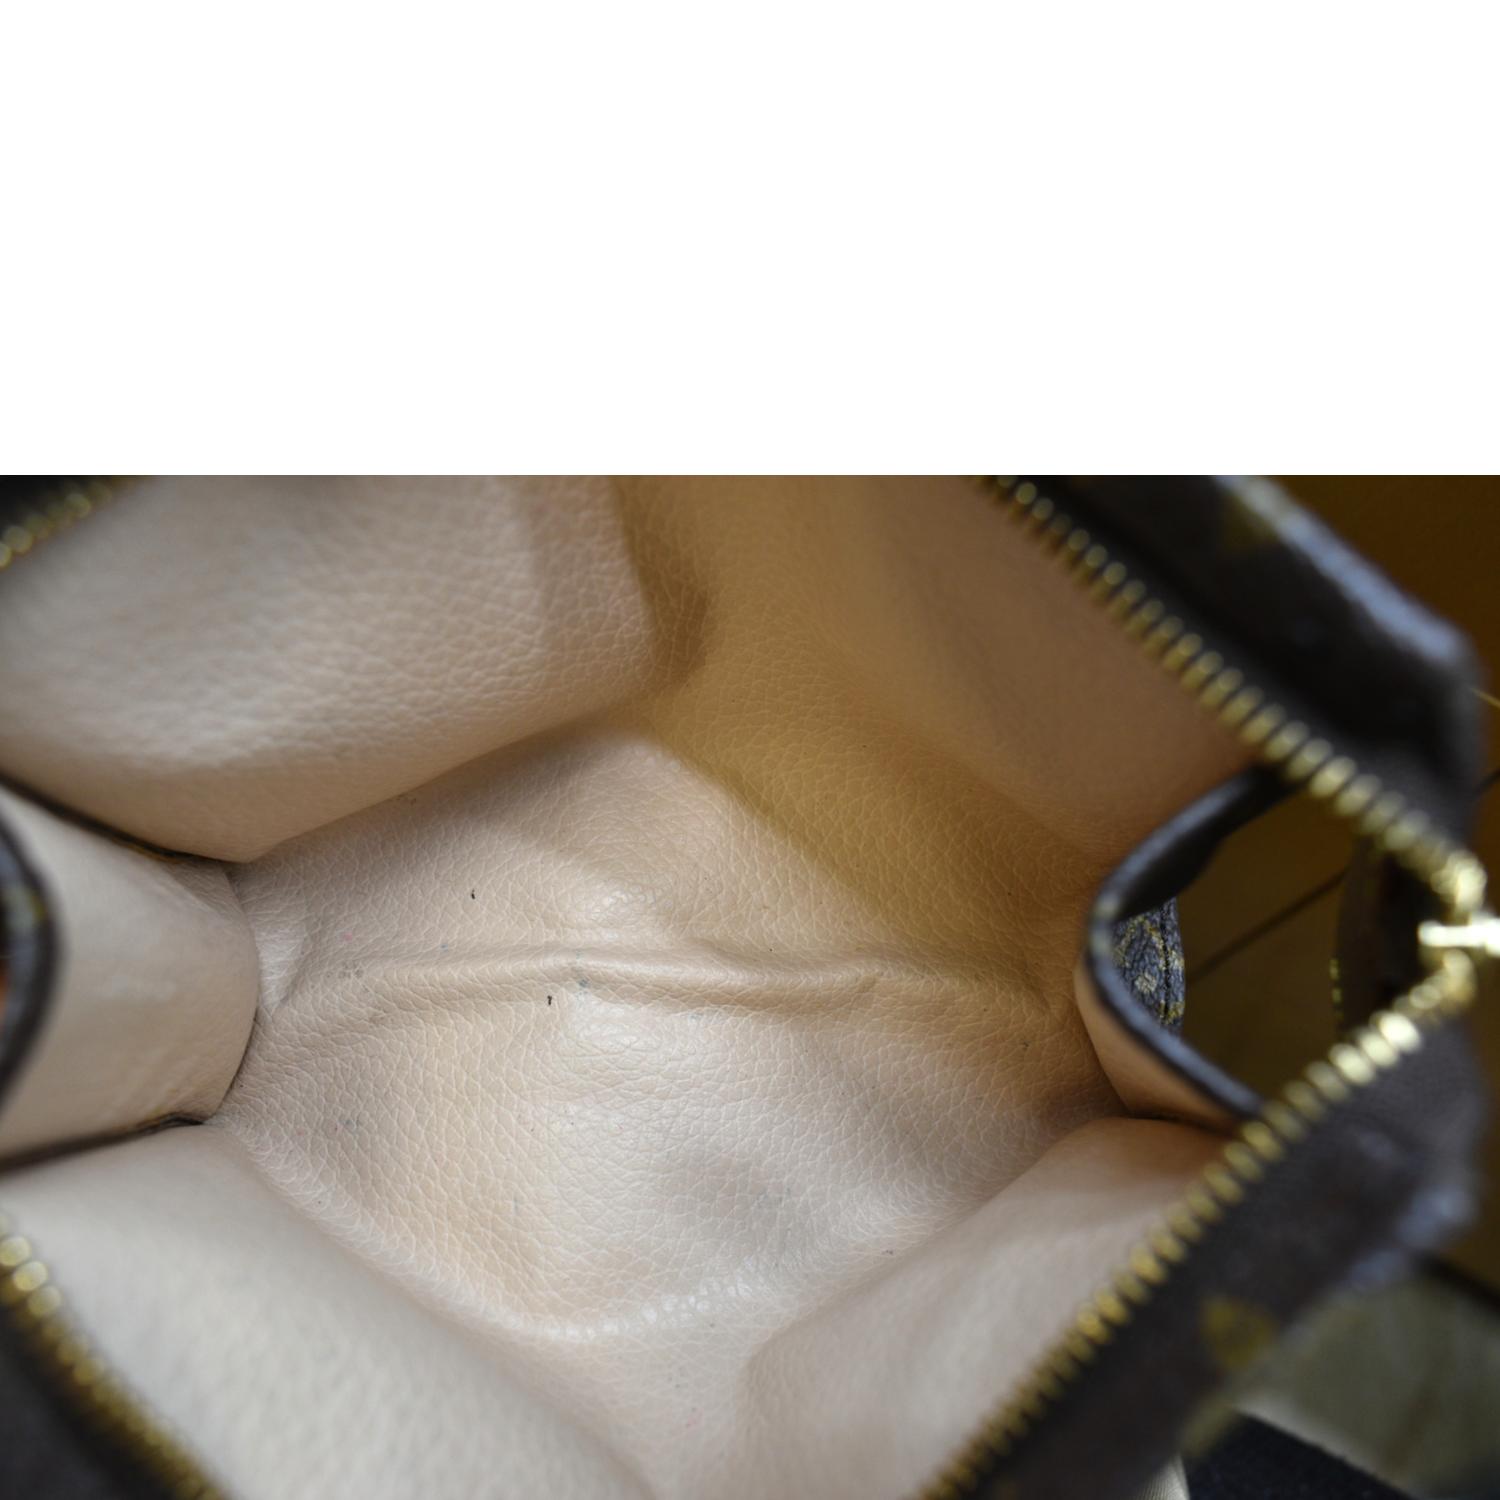 Louis Vuitton Monogram Toiletry 15 Cosmetic Pouch to Crossbody Handbag  Purse